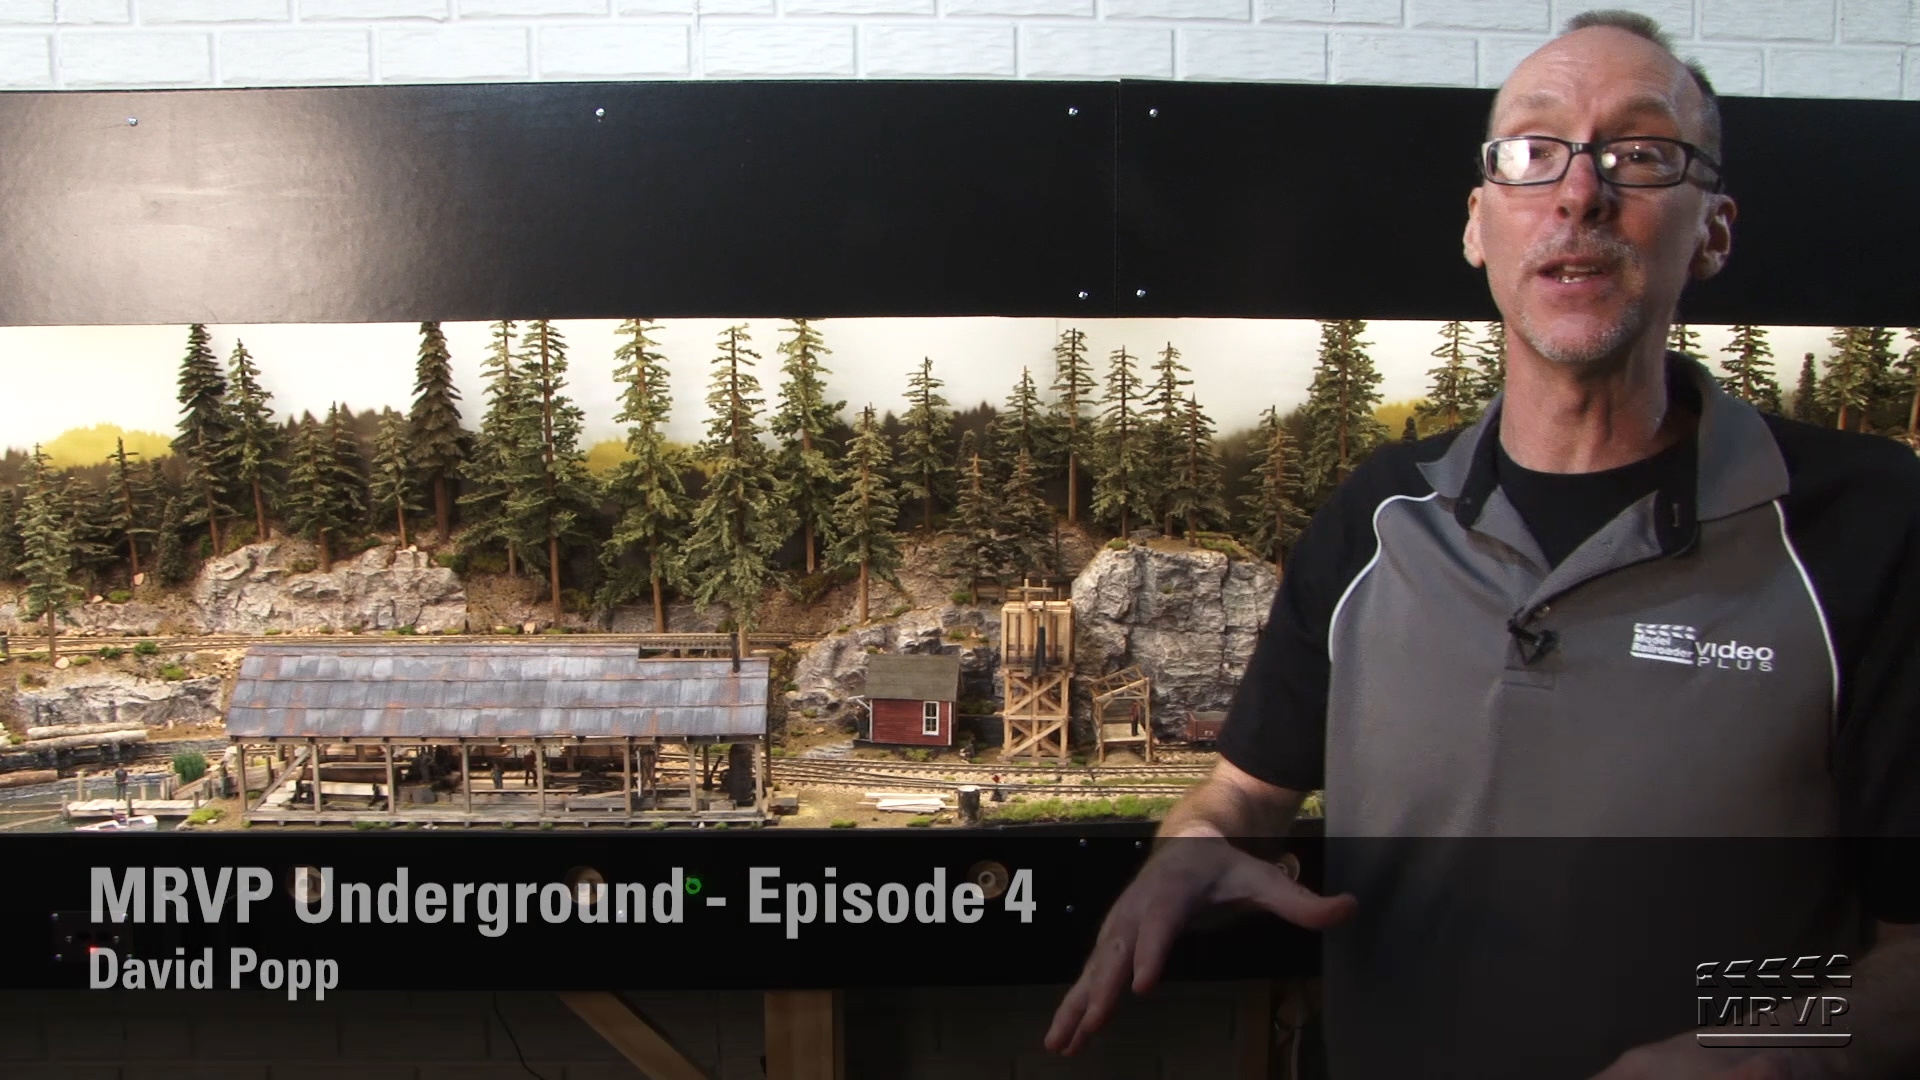 MRVP Insider: MRVP Underground with David Popp, Episode 4 – Putting parts together